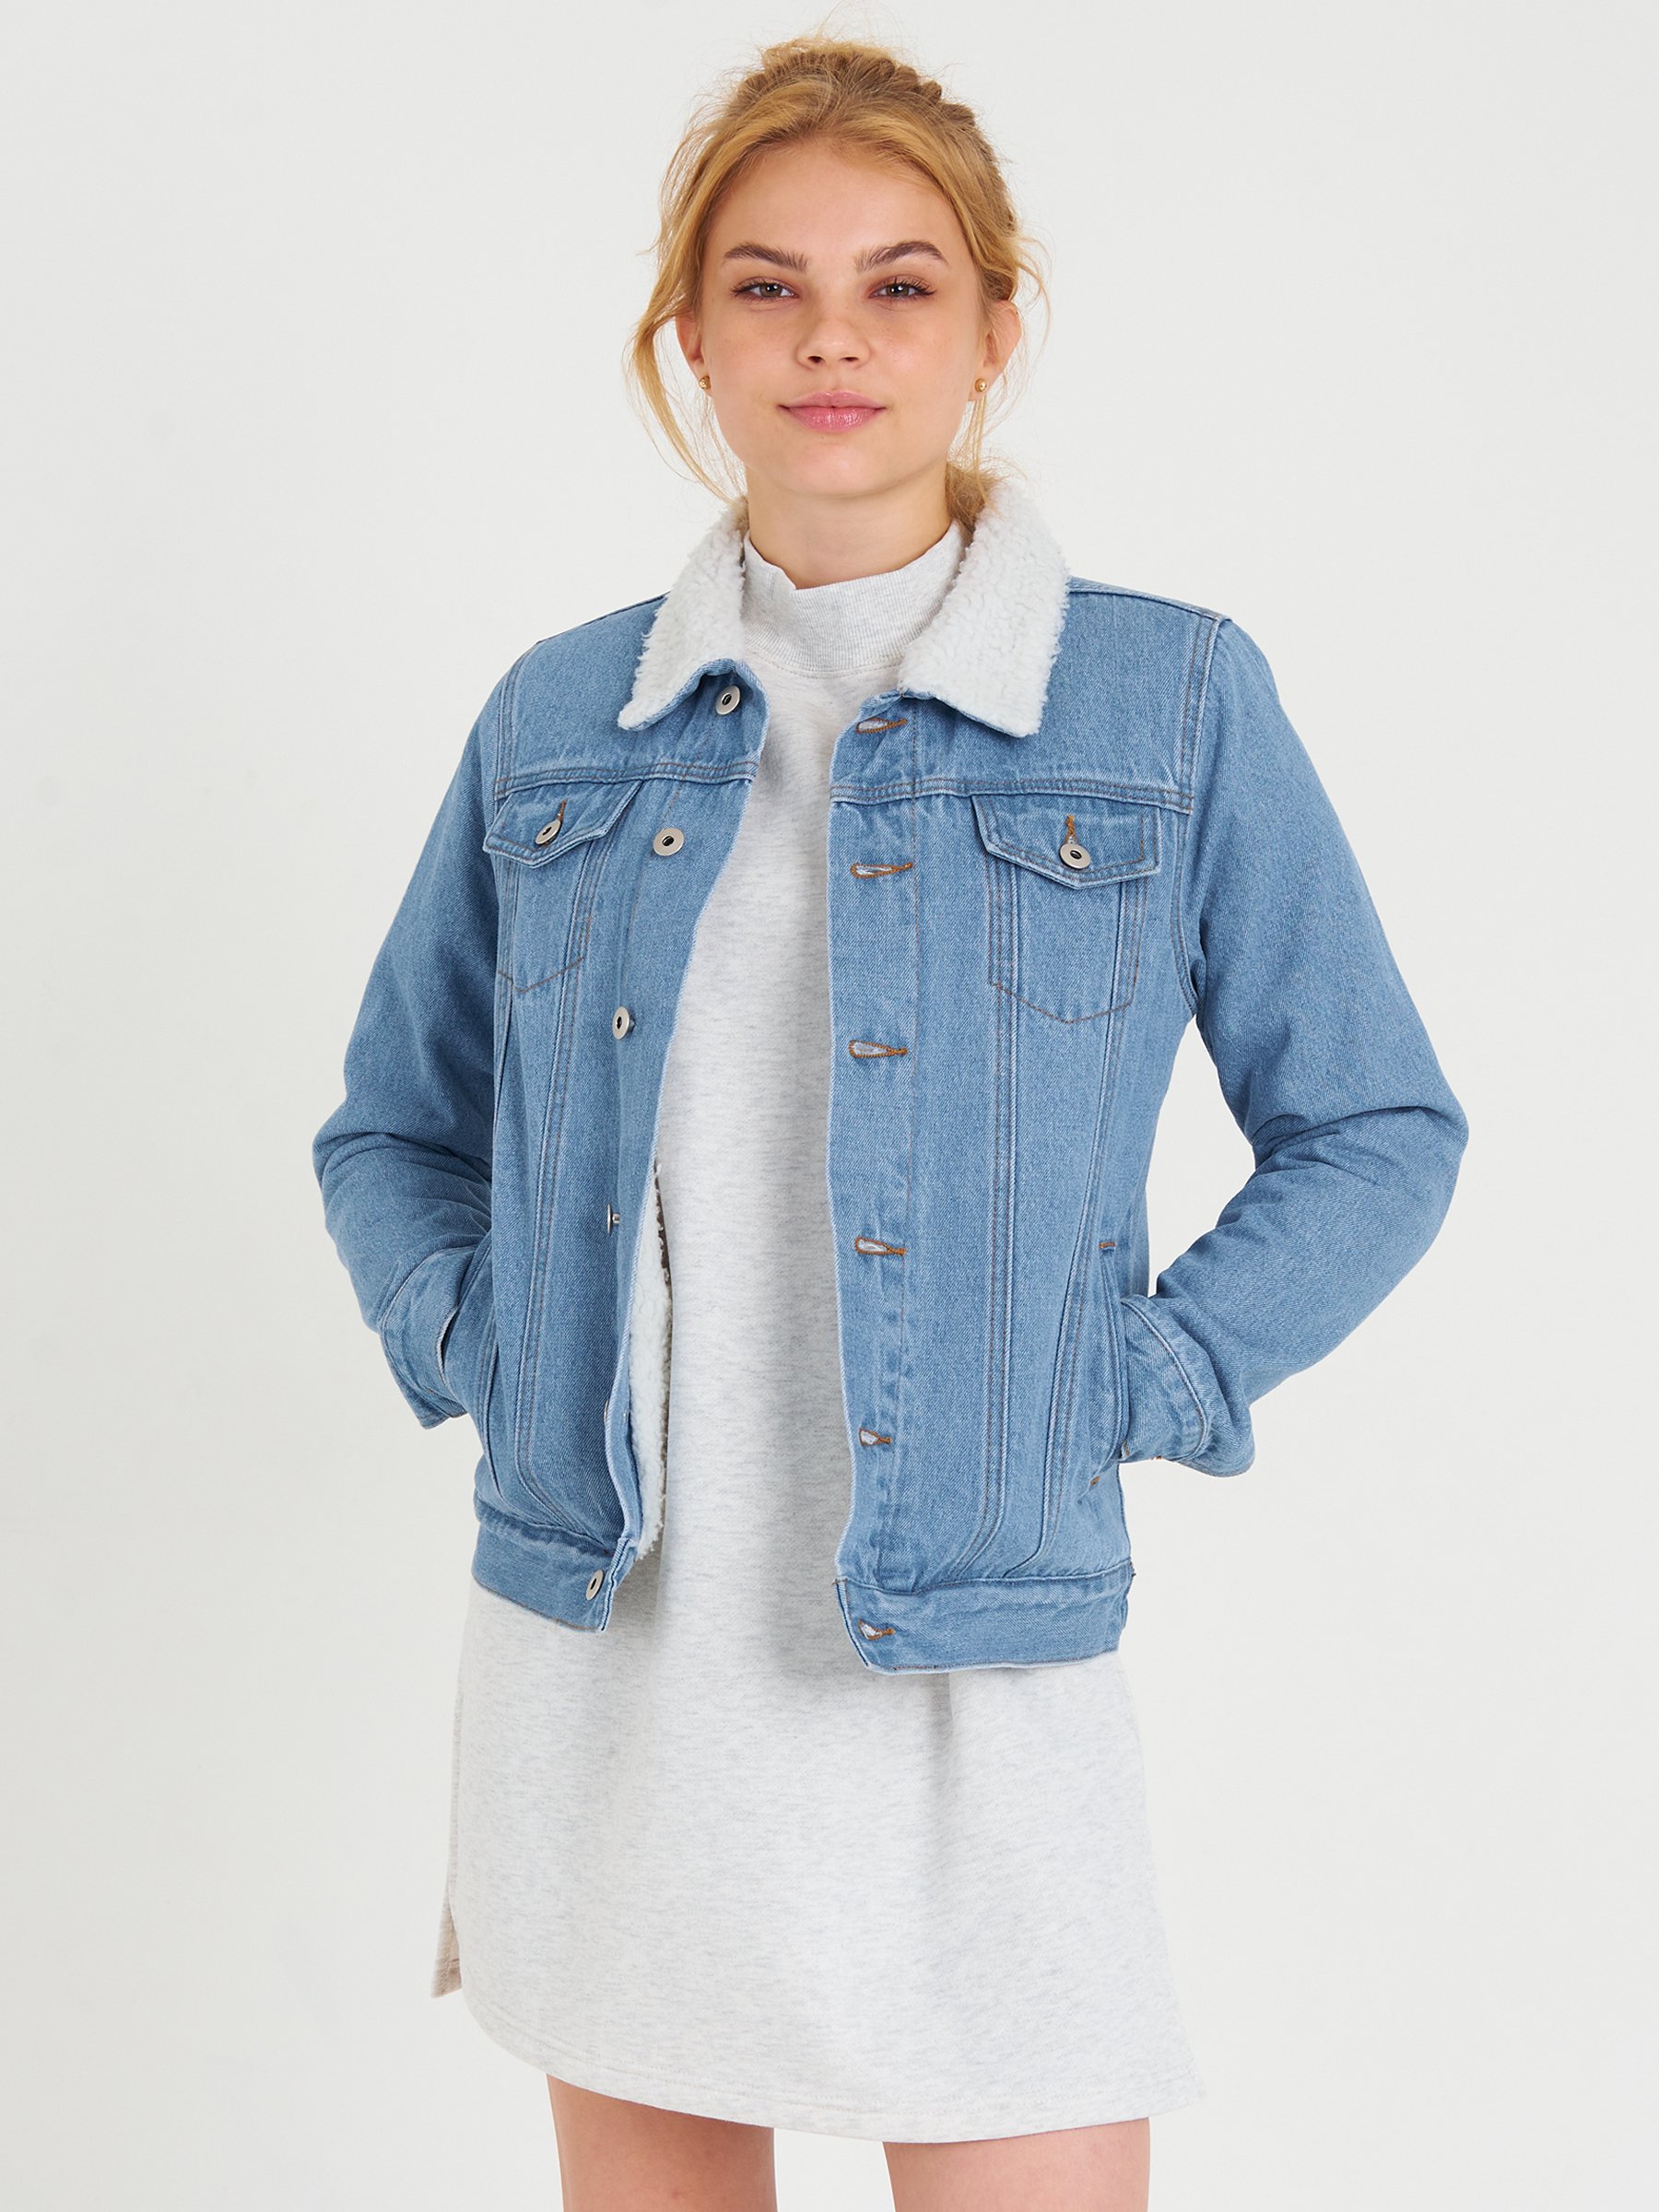 Zara vest Blue 110                  EU discount 88% KIDS FASHION Jackets Jean 